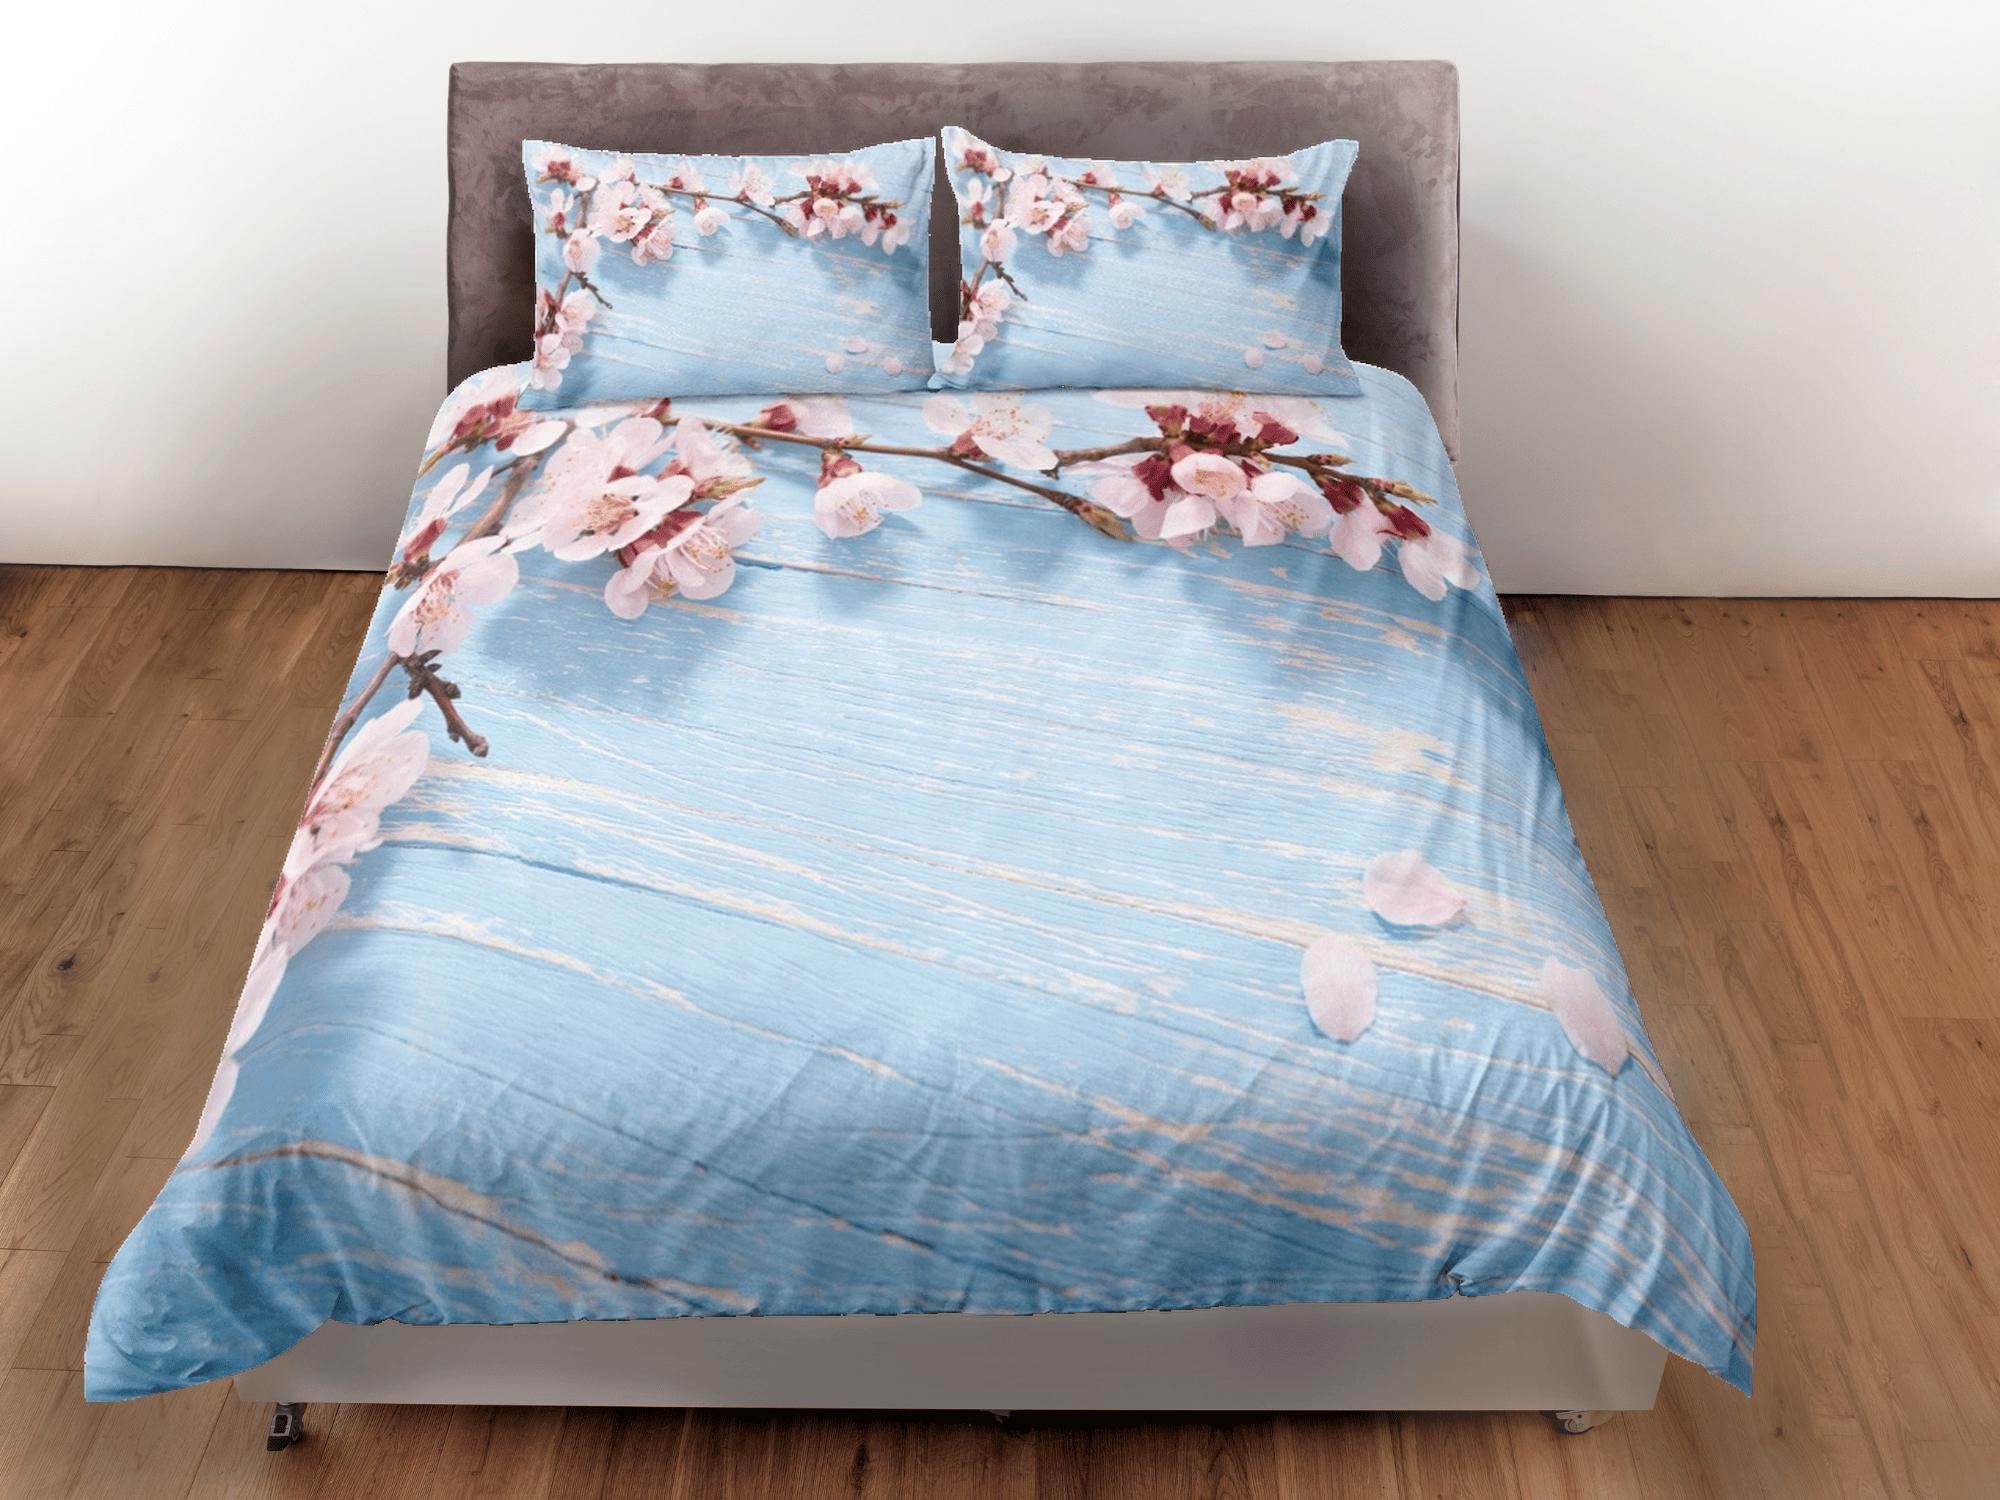 daintyduvet Cherry blossom blue bedding floral prints duvet cover queen, king, boho bedding designer bedspread maximalist full size bedding aesthetic